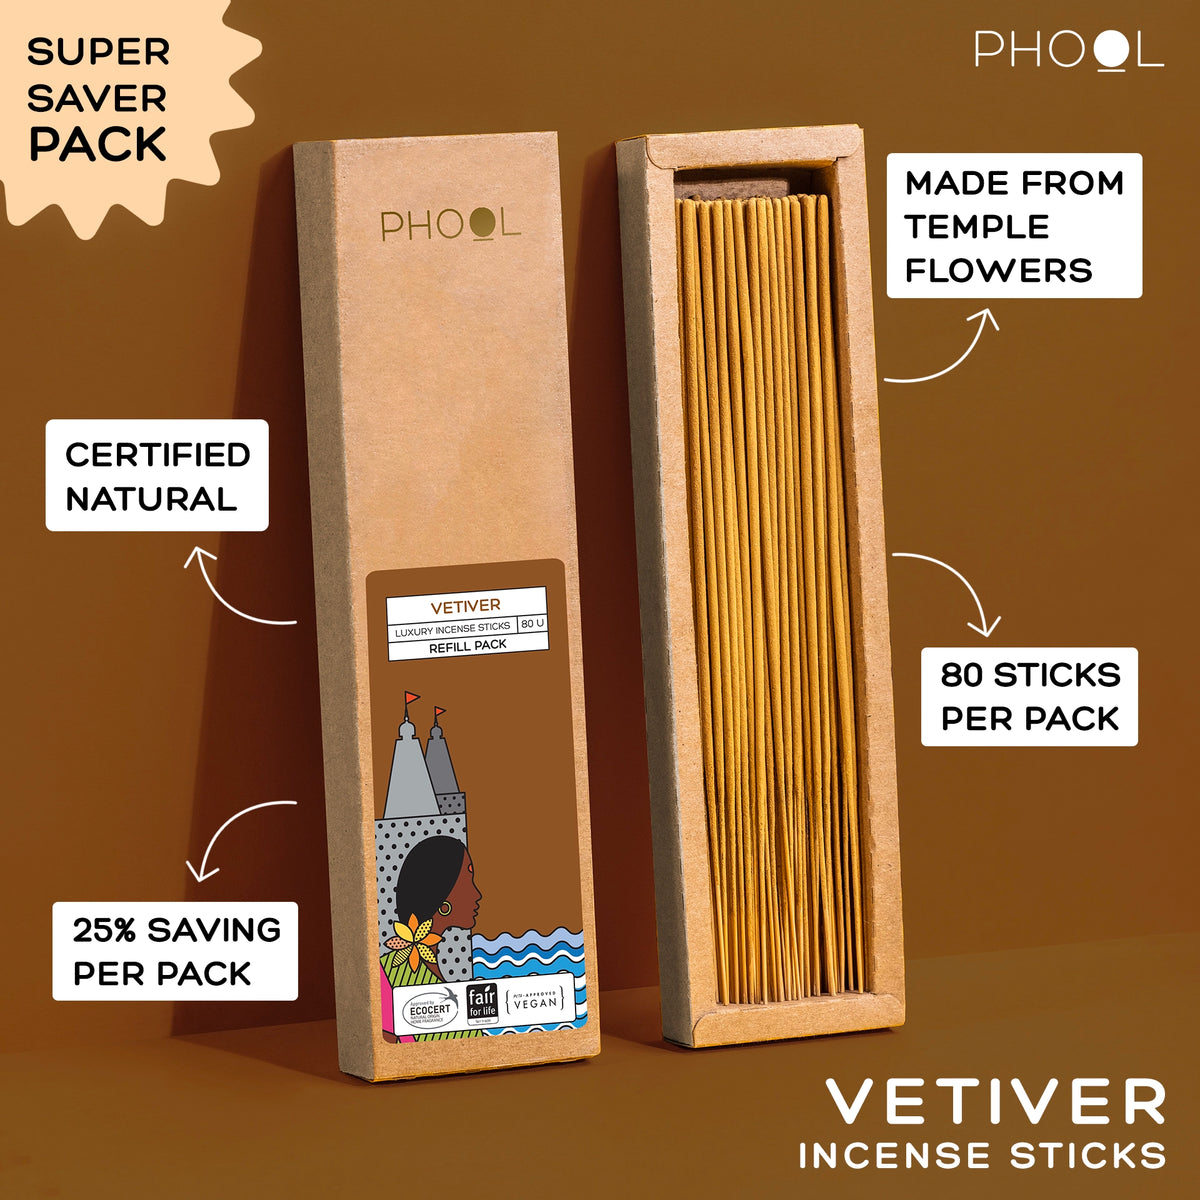 Phool Natural Incense Sticks Refill pack - Vetiver